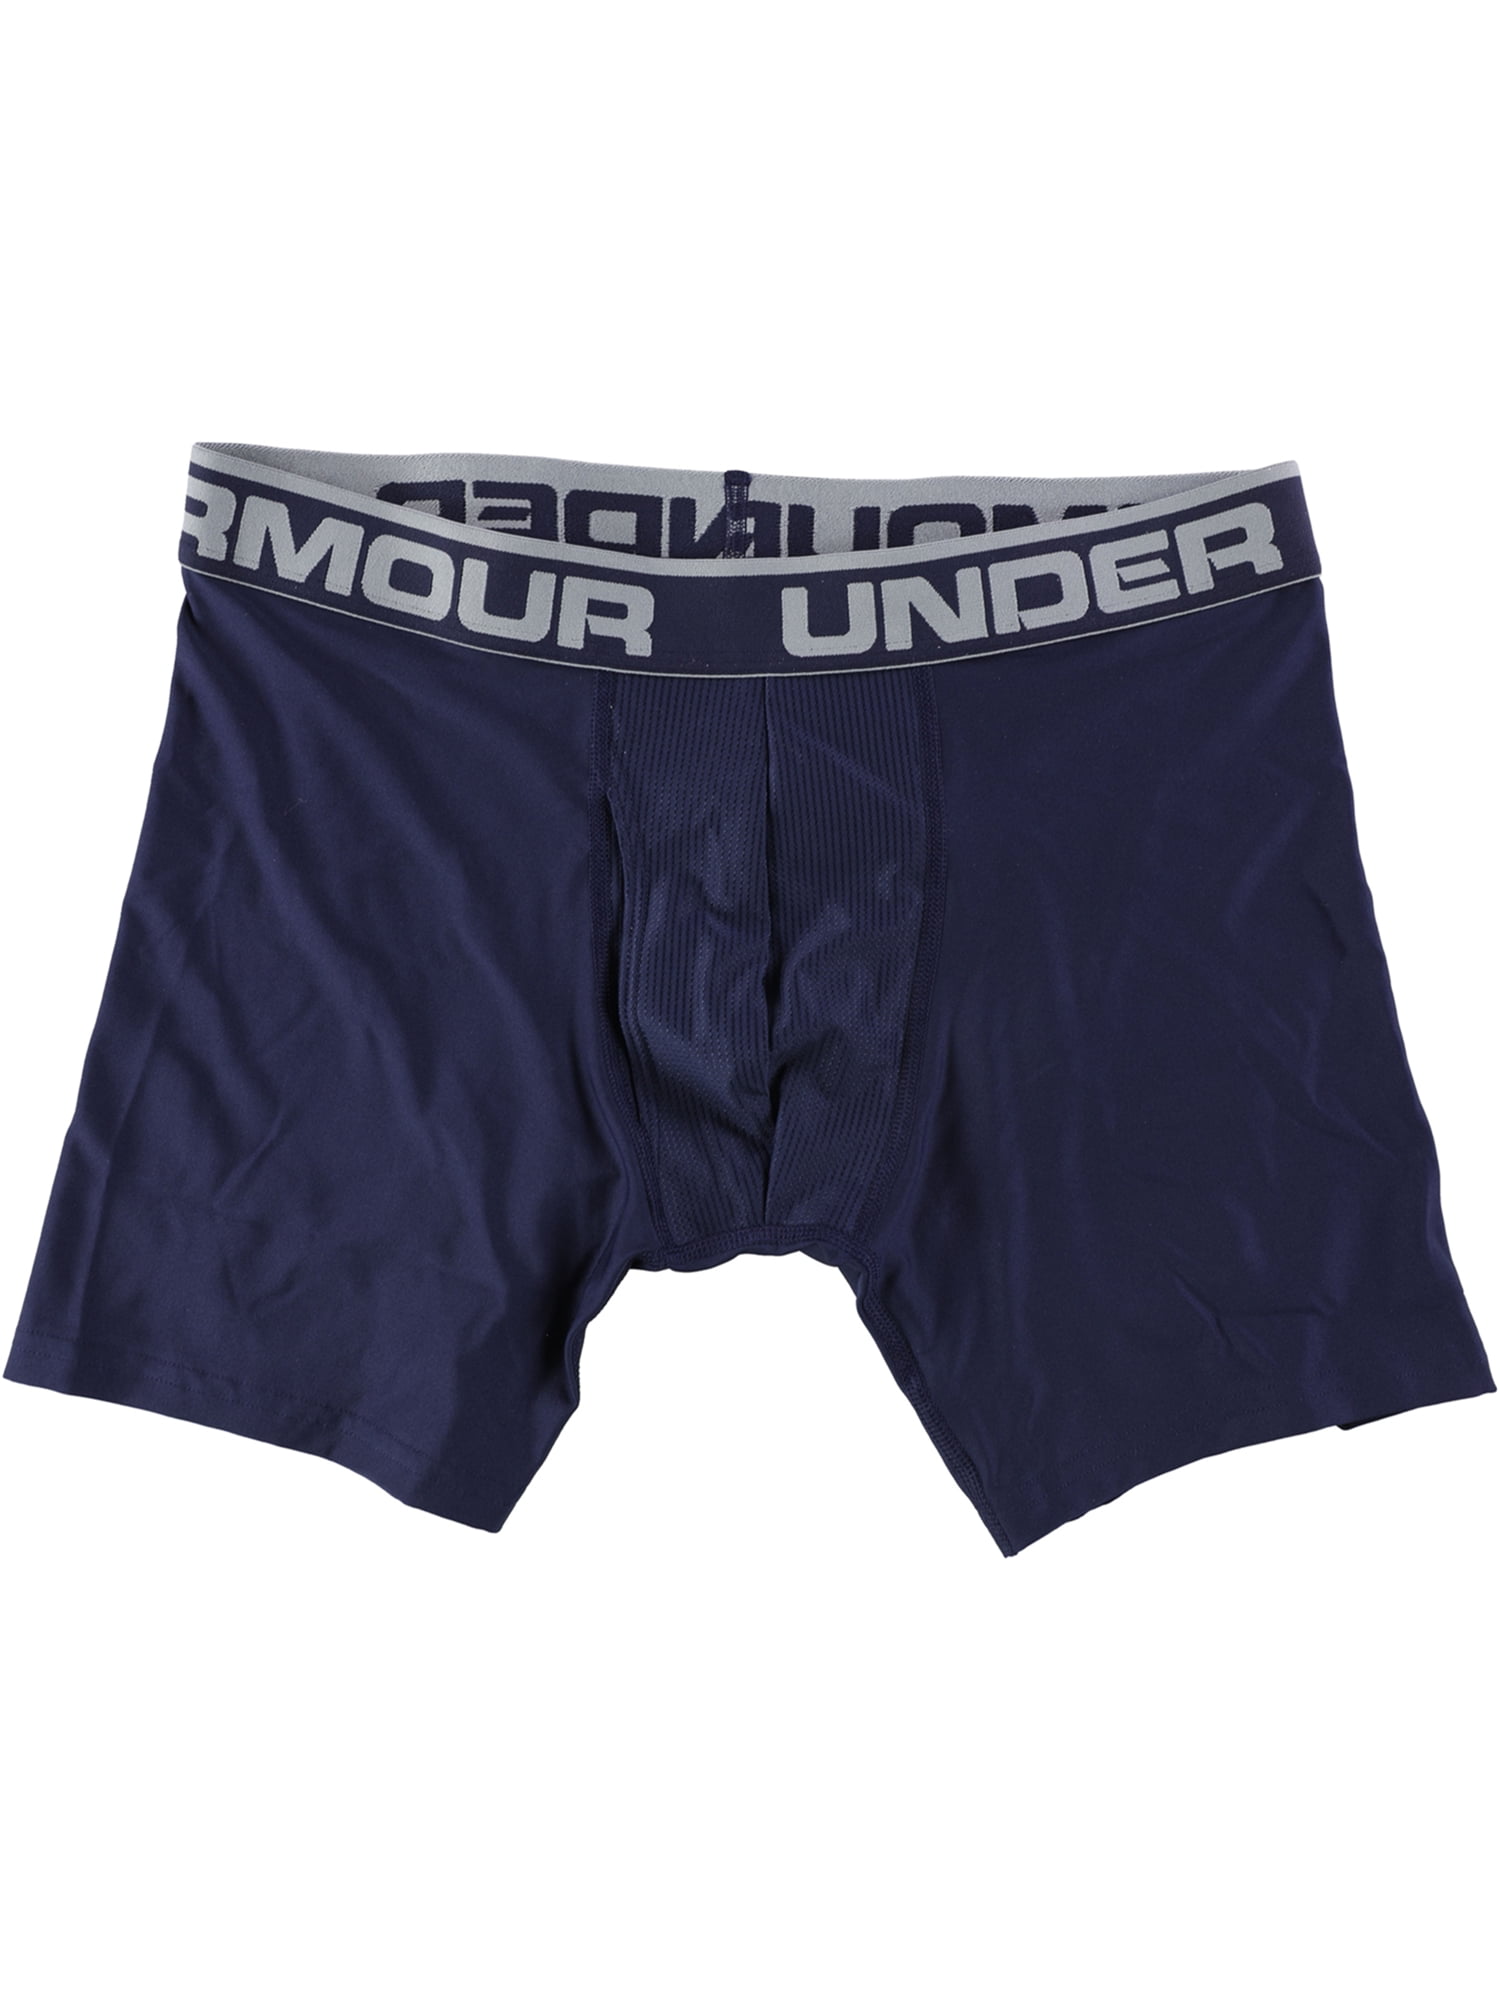 Under Armour Mens UA Original Underwear Boxer Briefs - Walmart.com